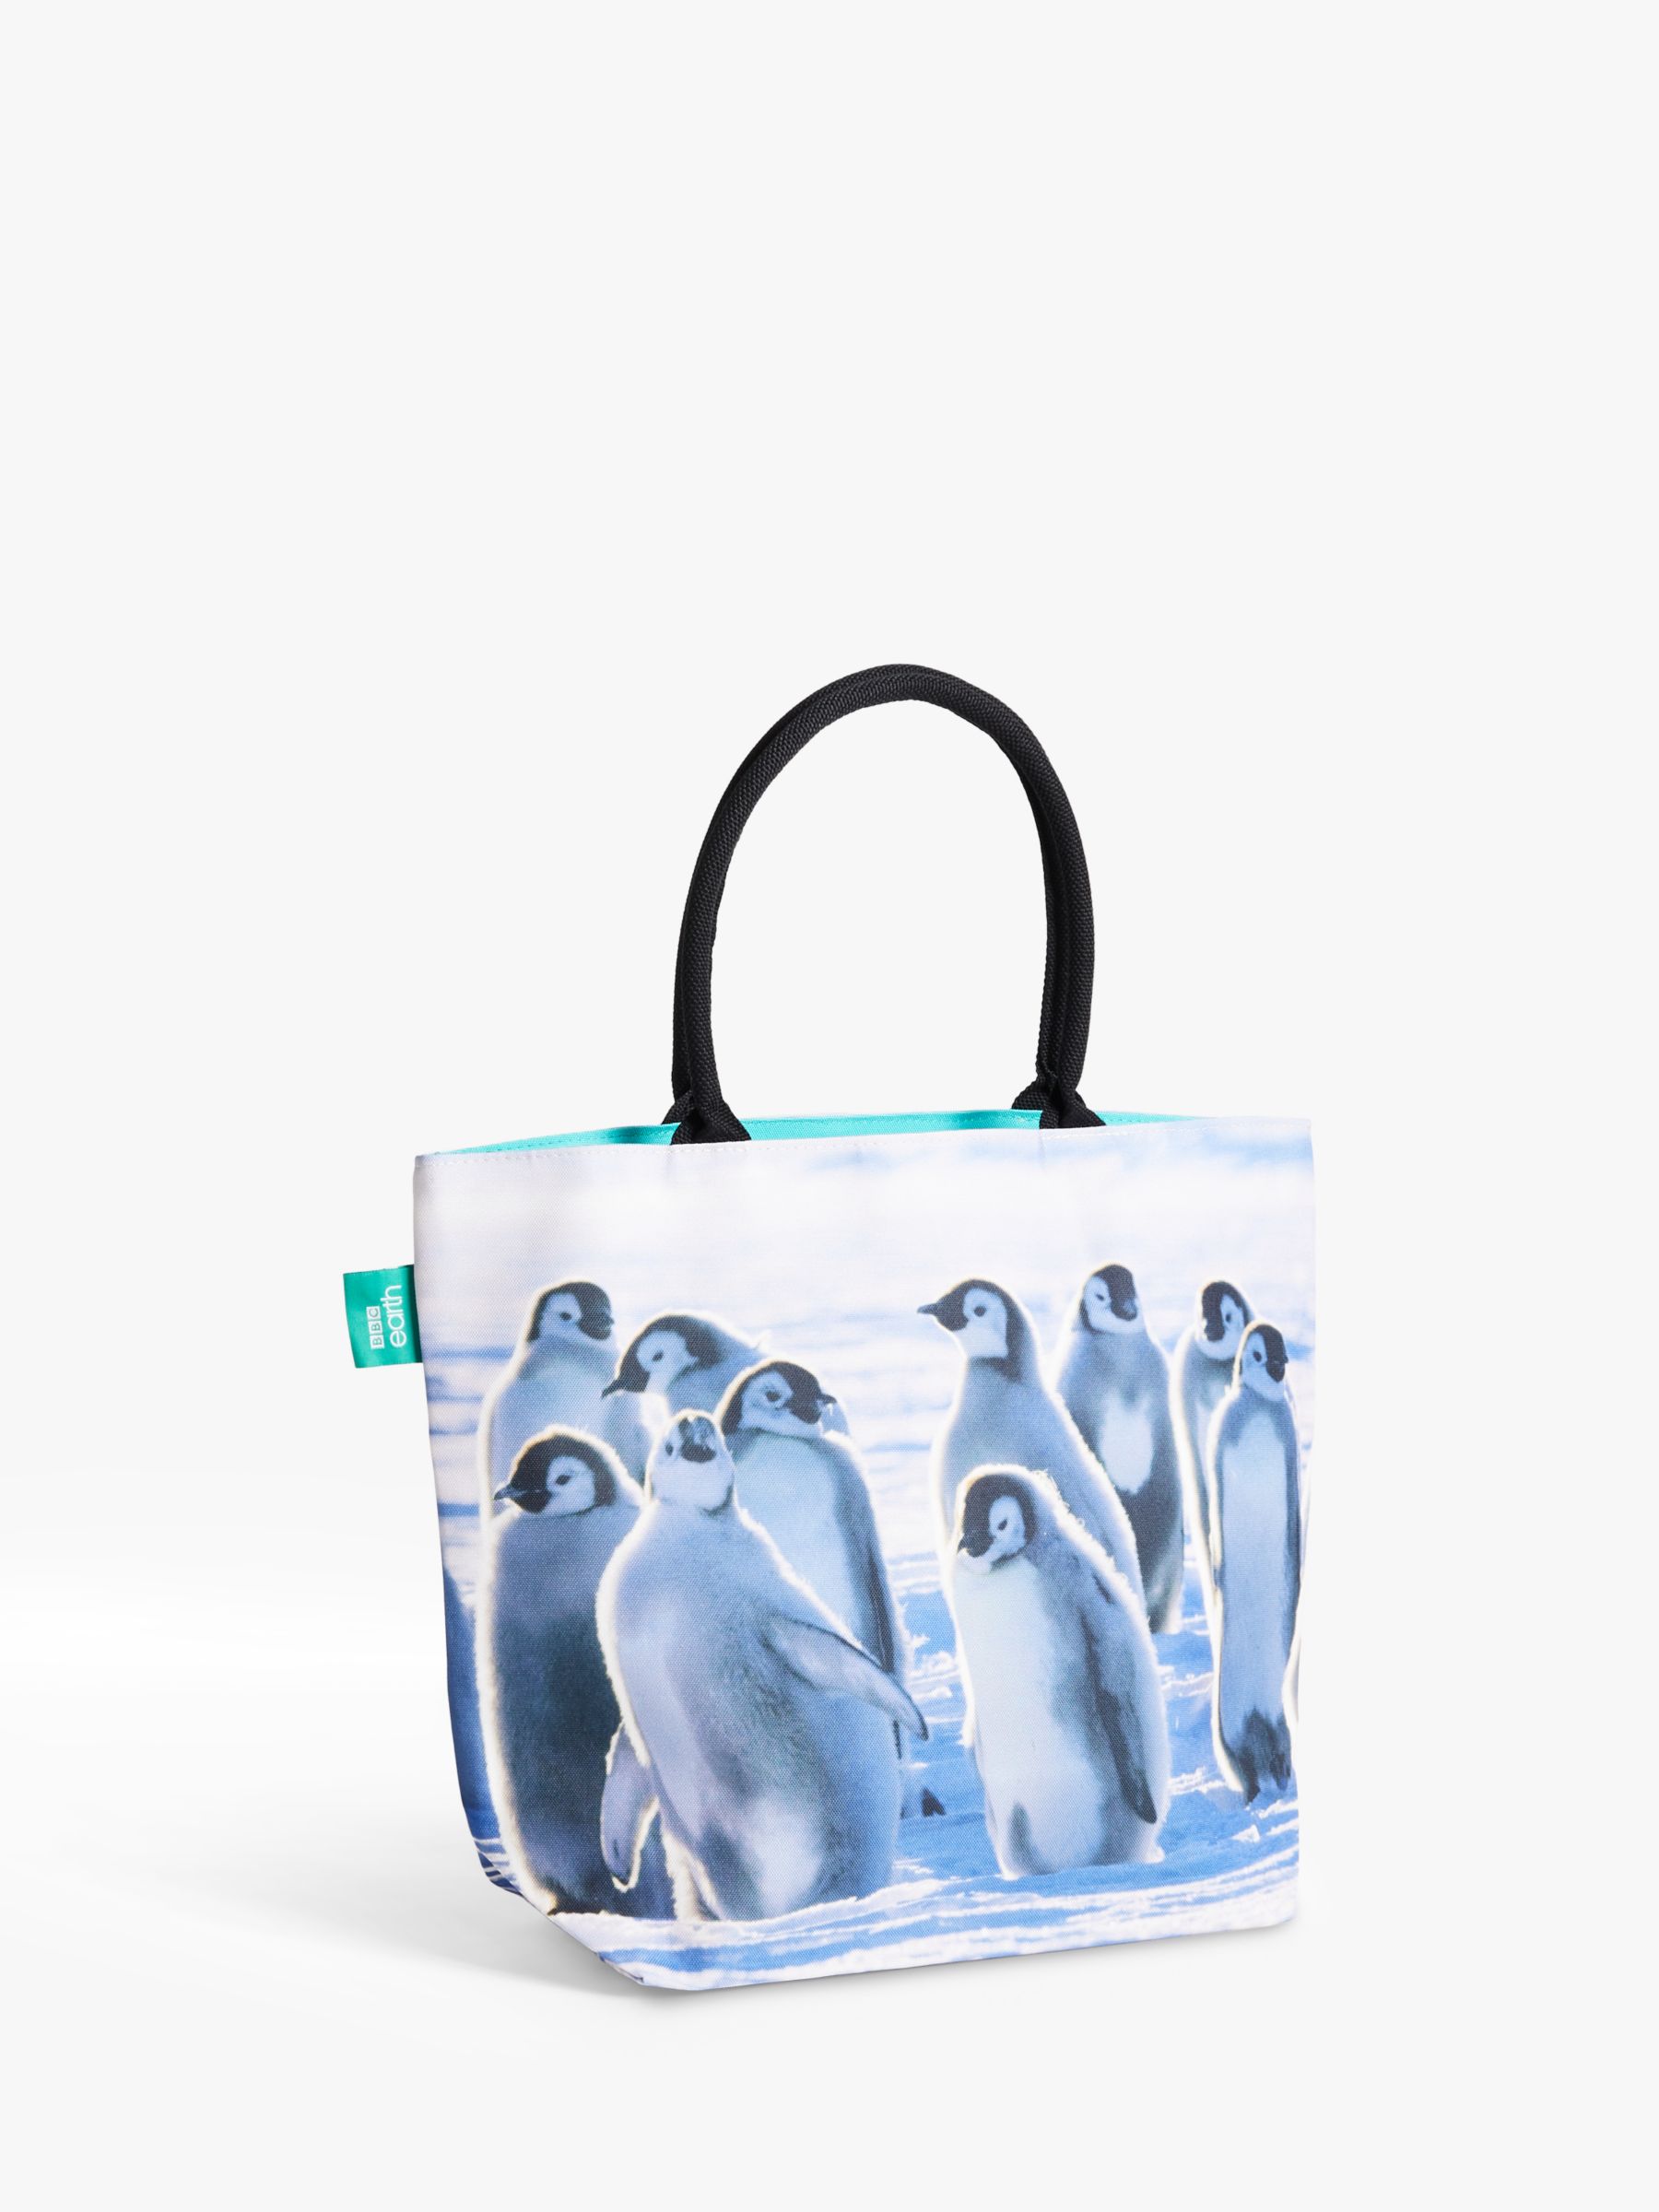 BBC Earth Penguin Tote Bag at John Lewis & Partners